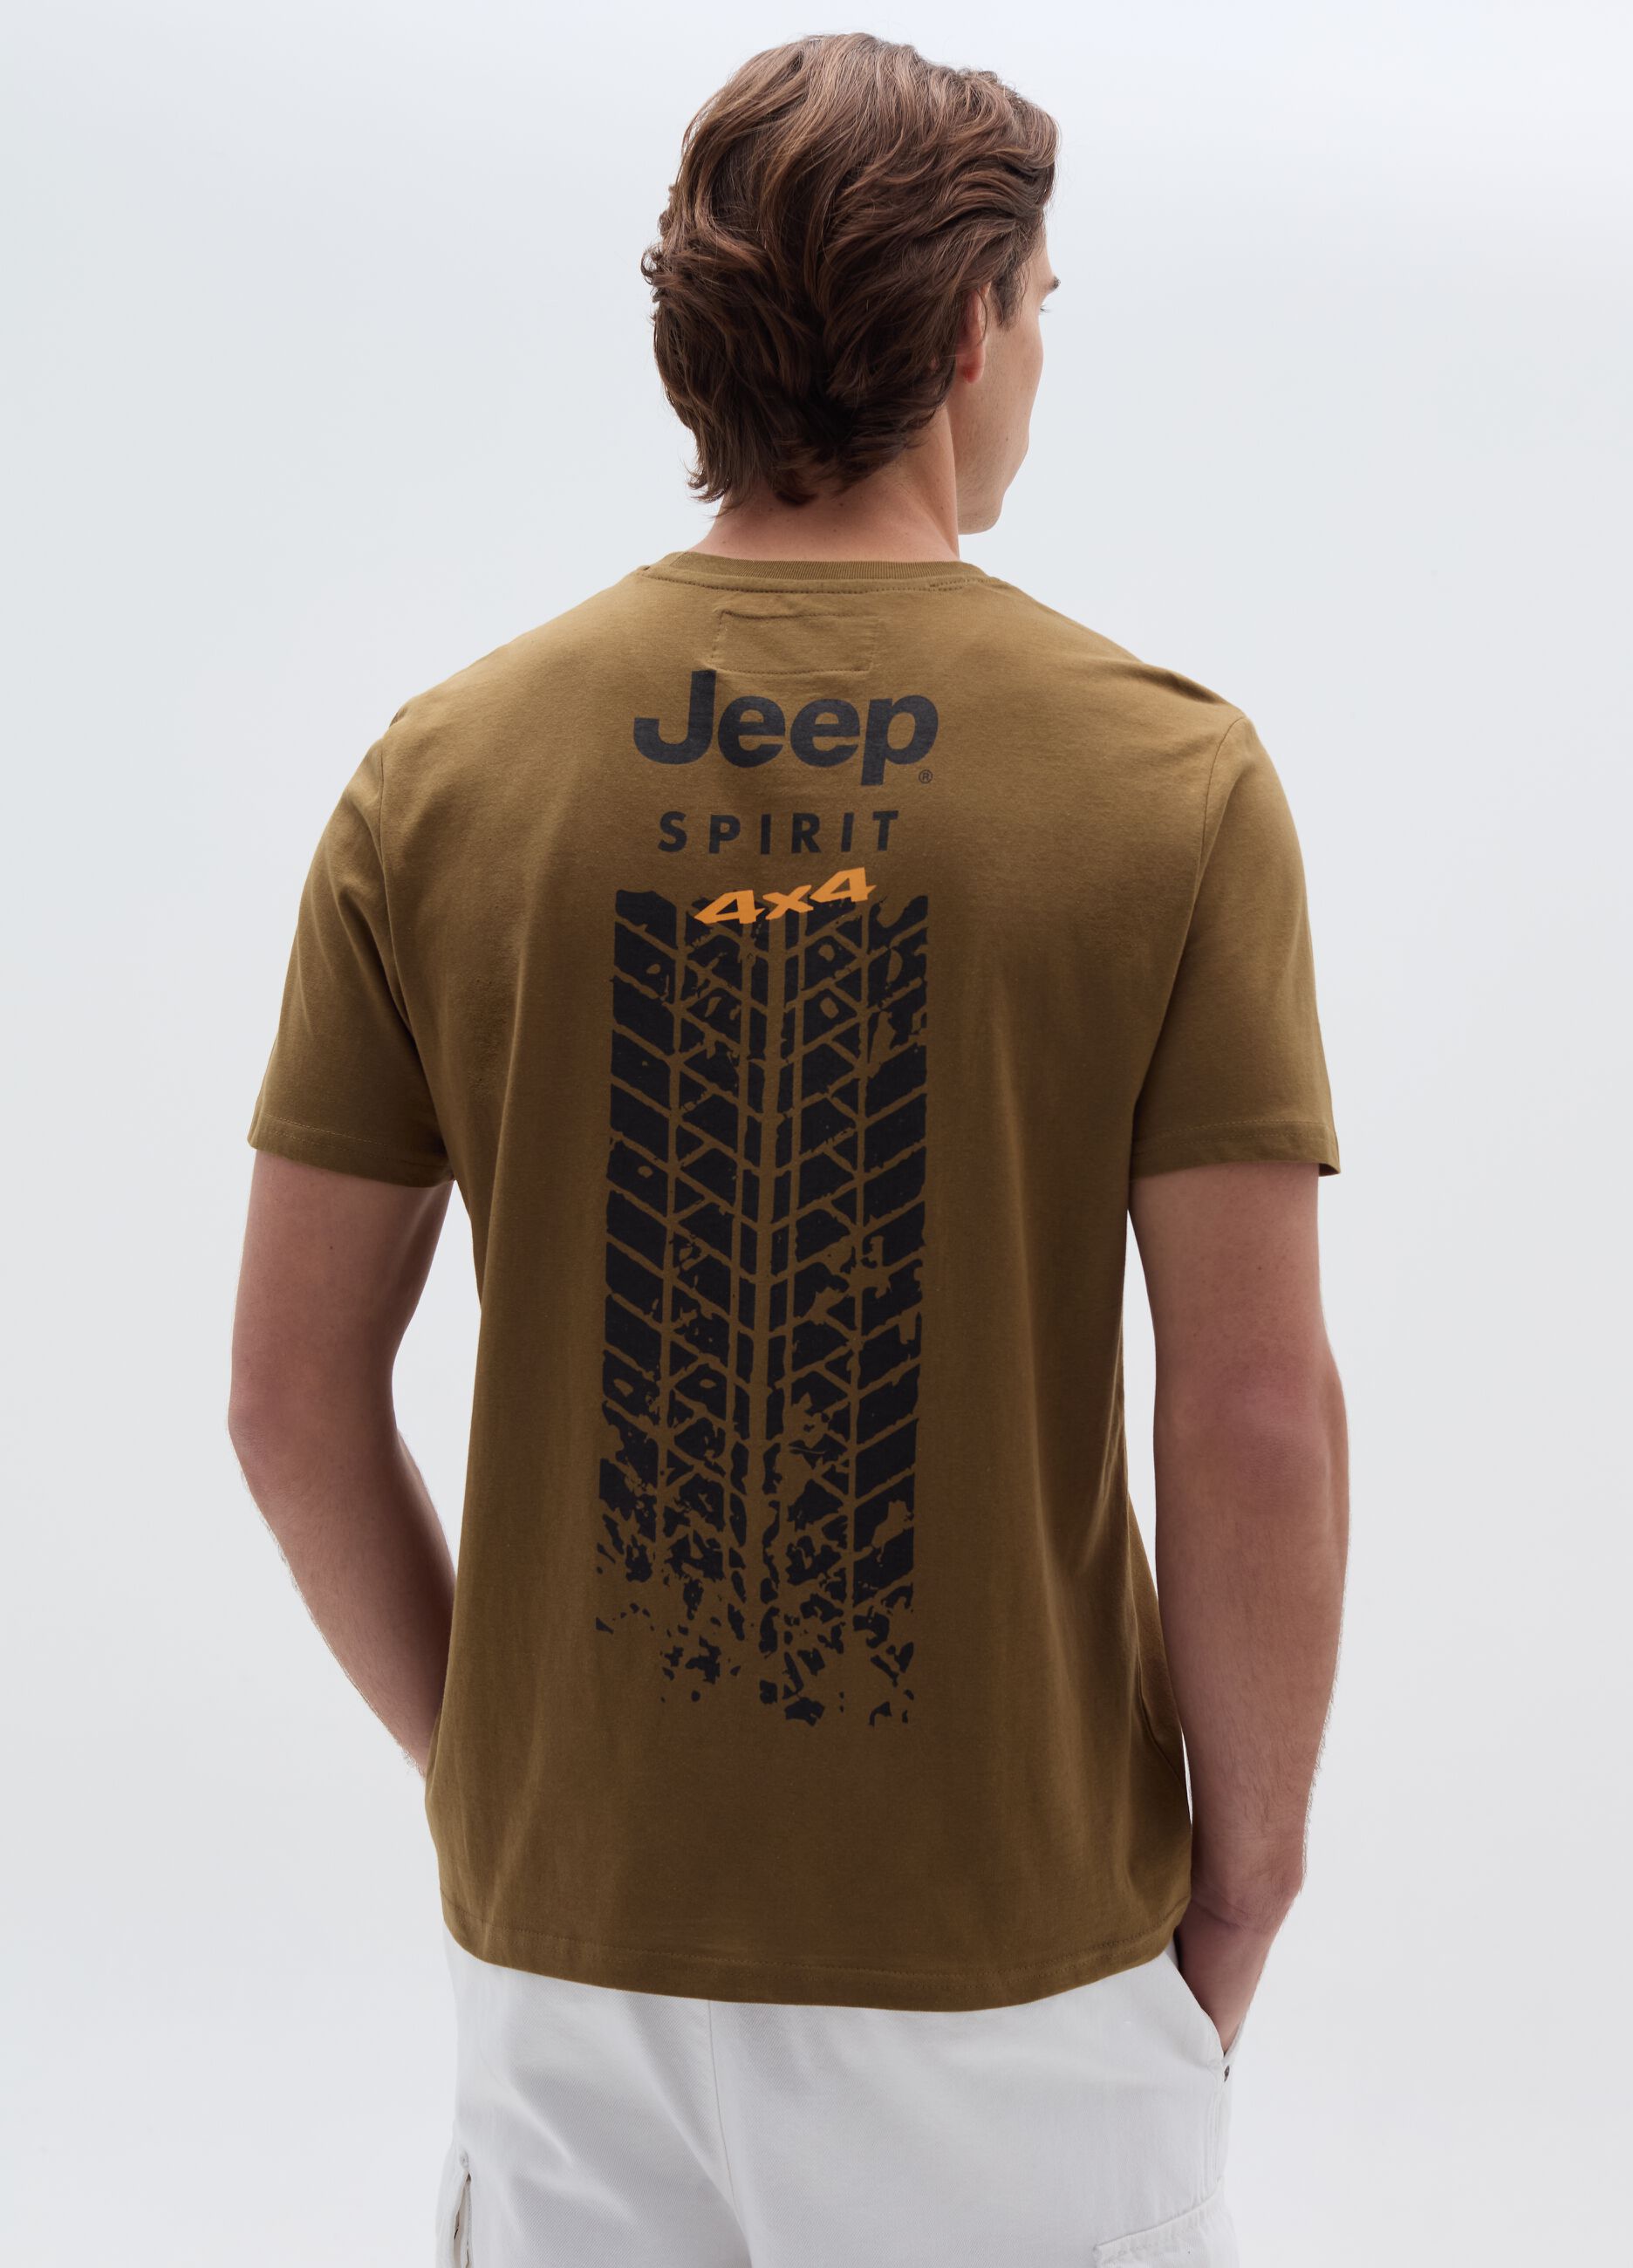 Cotton T-shirt with Jeep Spirit print